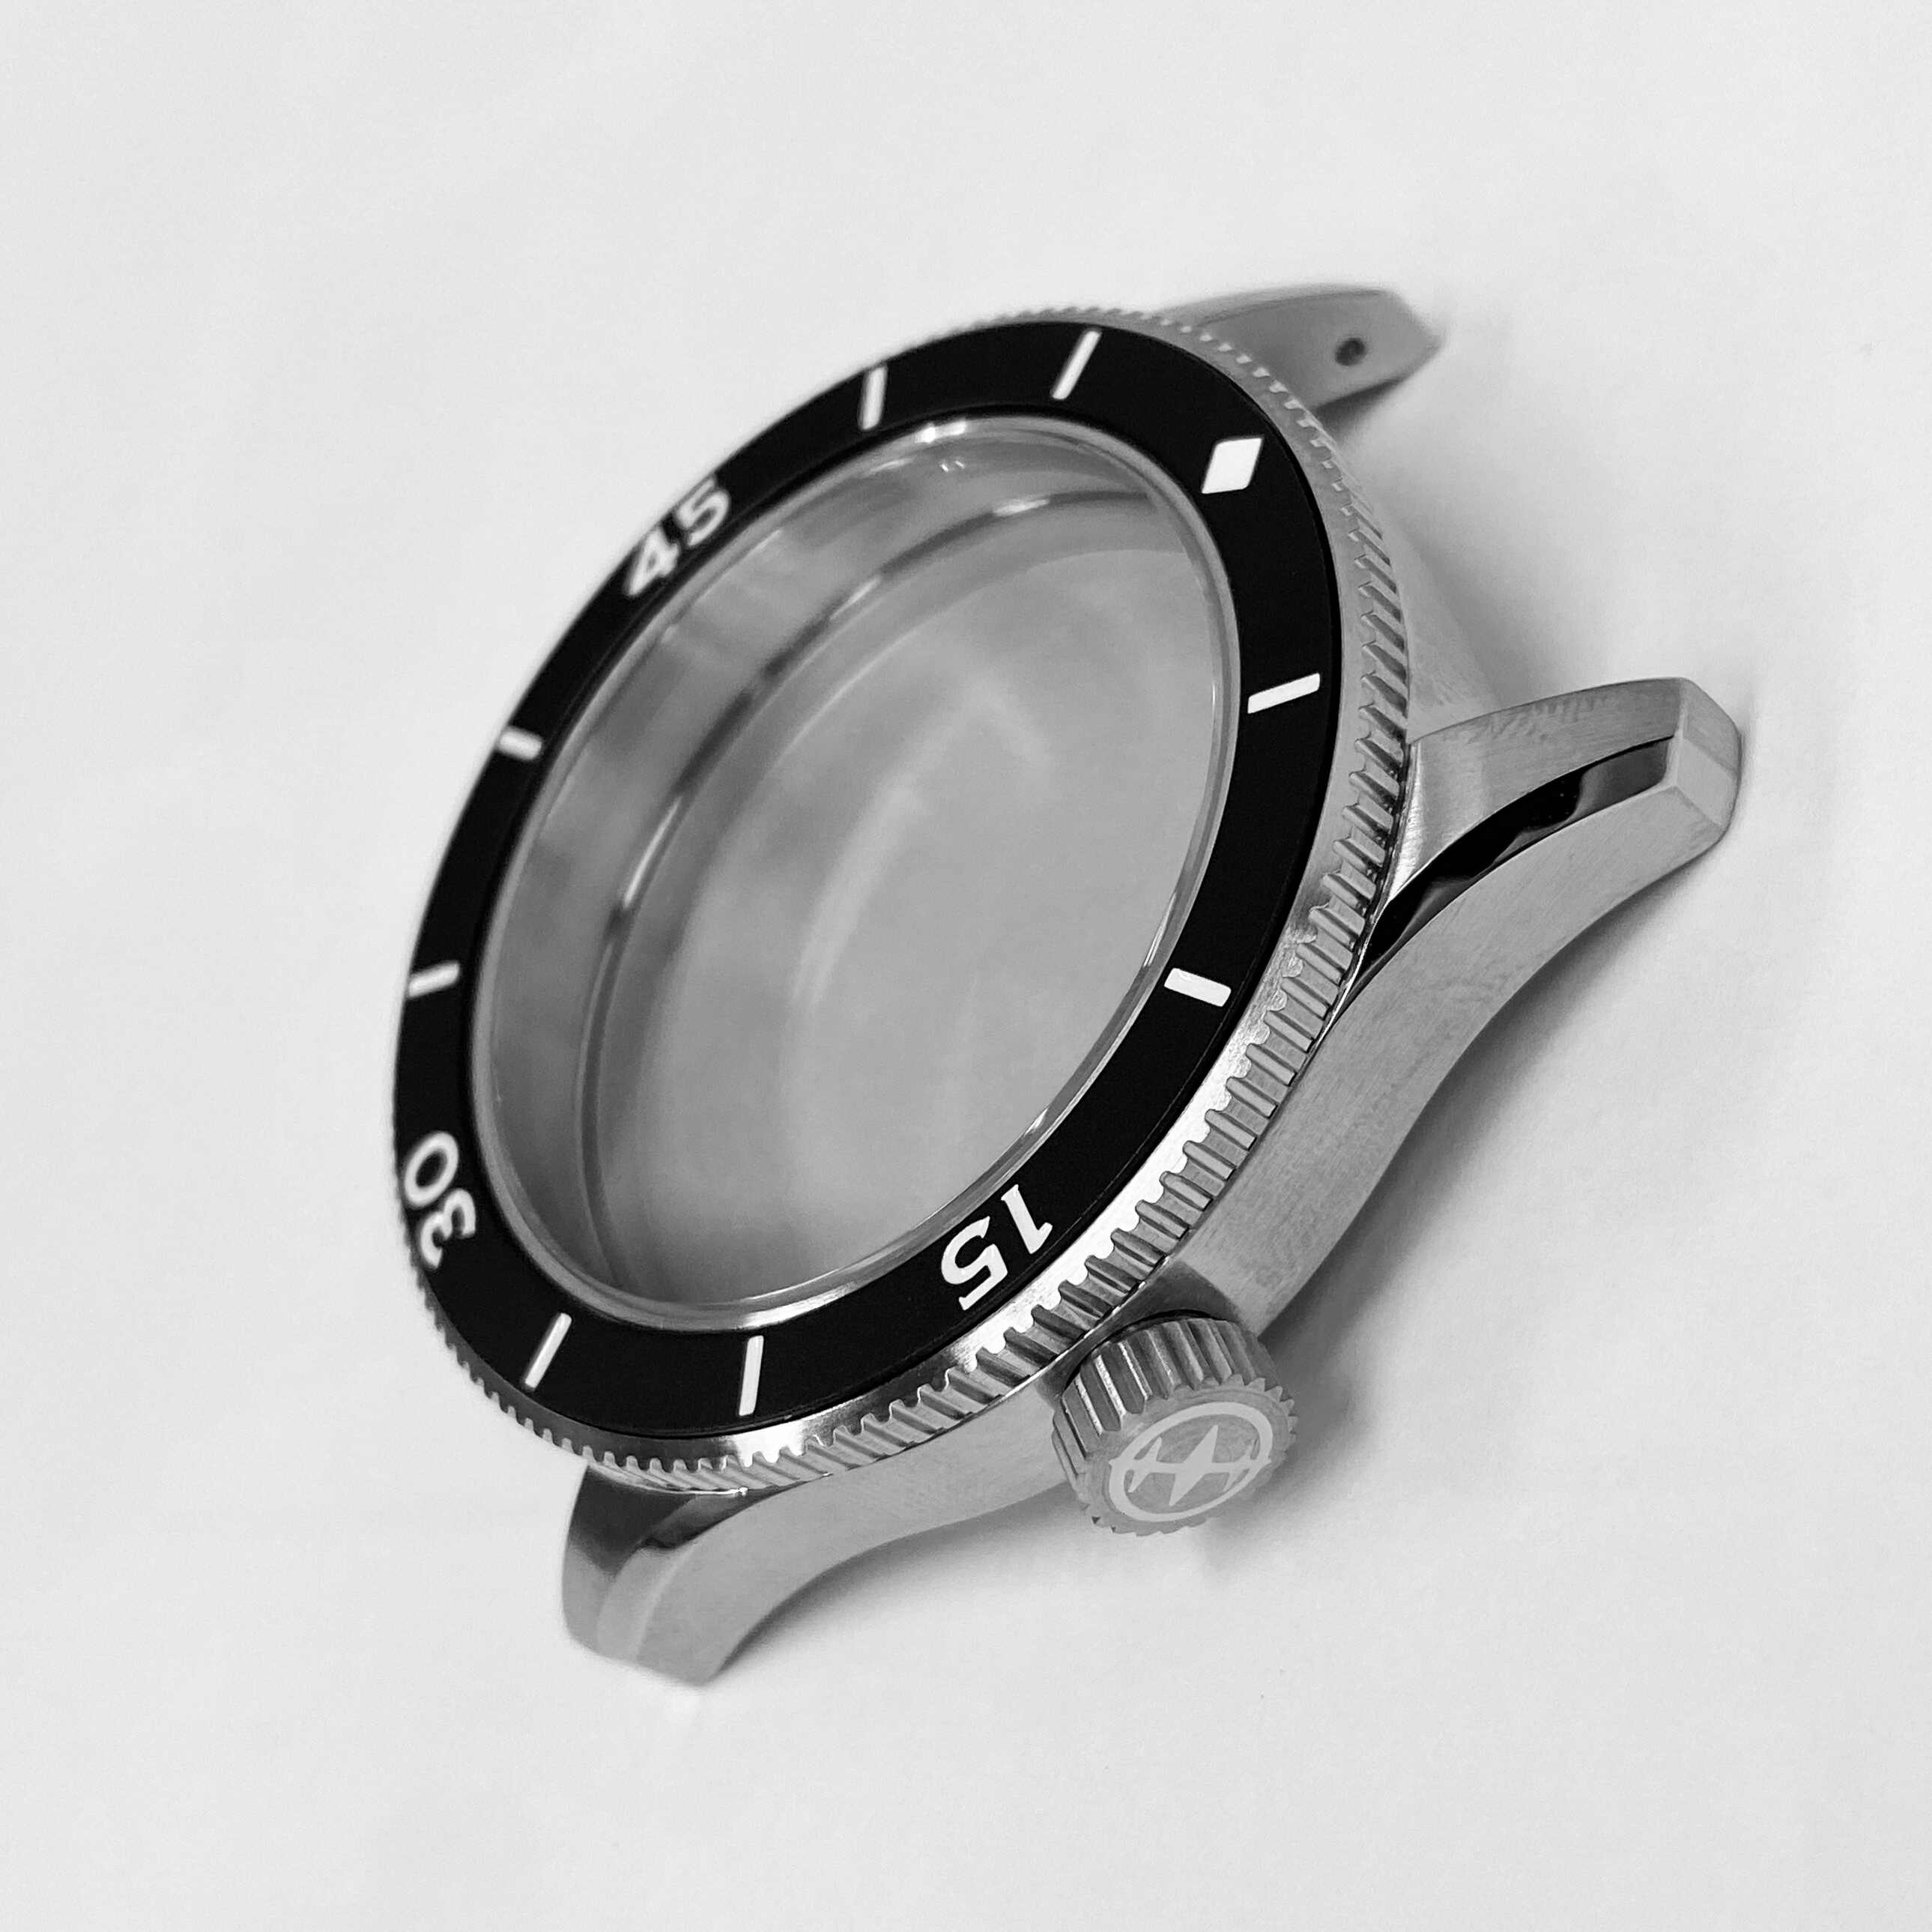 316 stainless steel diver watch case, sapphire glass, screw down crown, Houtman Watches Australia